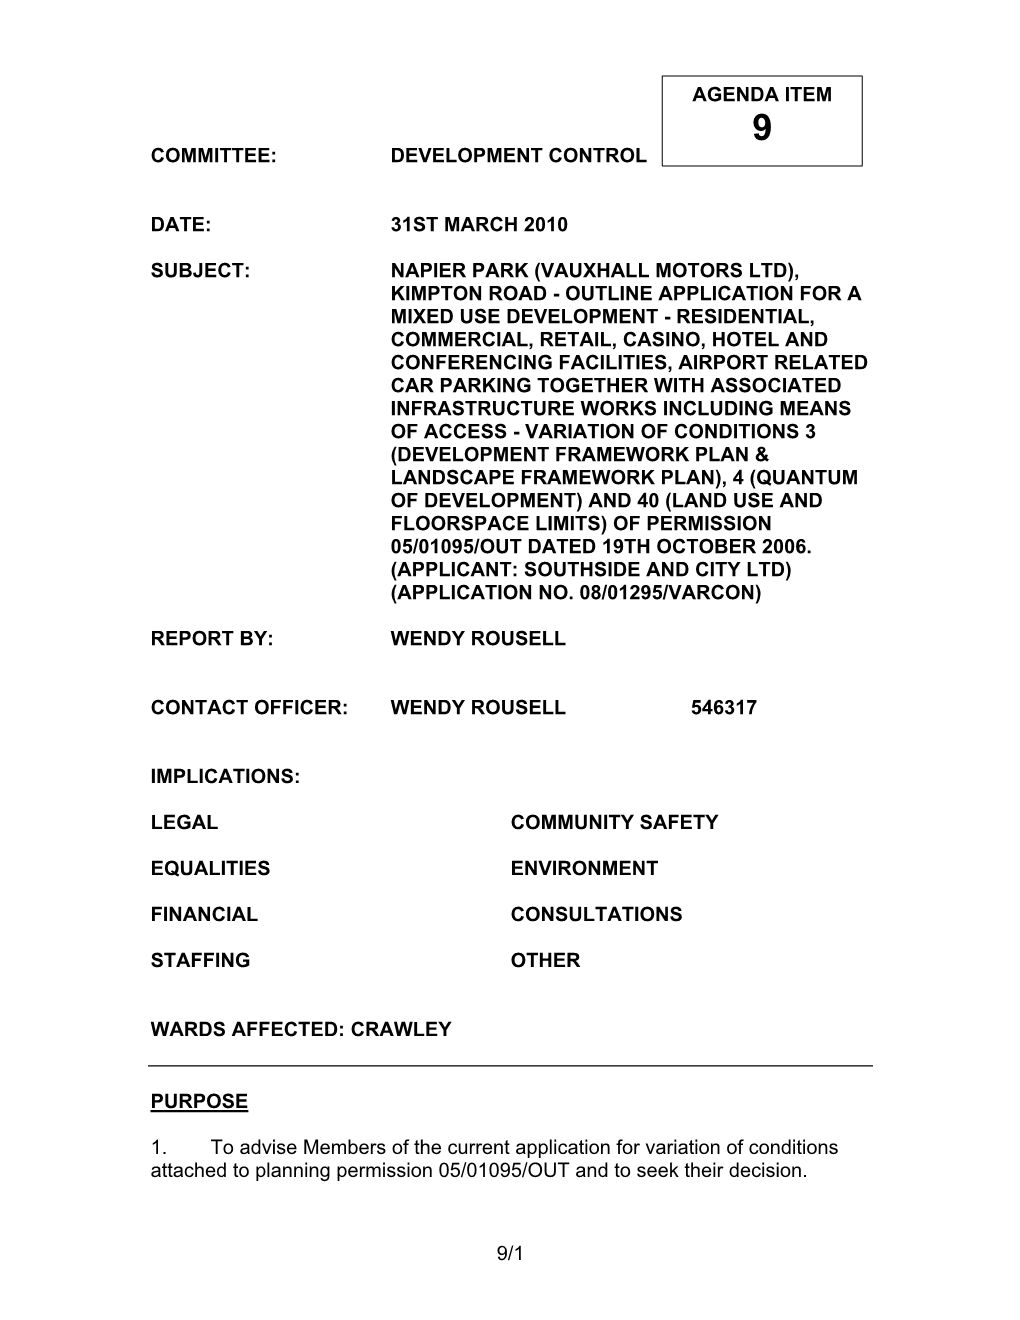 Committee: Development Control Agenda Item Date: 31St March 2010 Subject: Napier Park (Vauxhall Motors Ltd), Kimpton Road